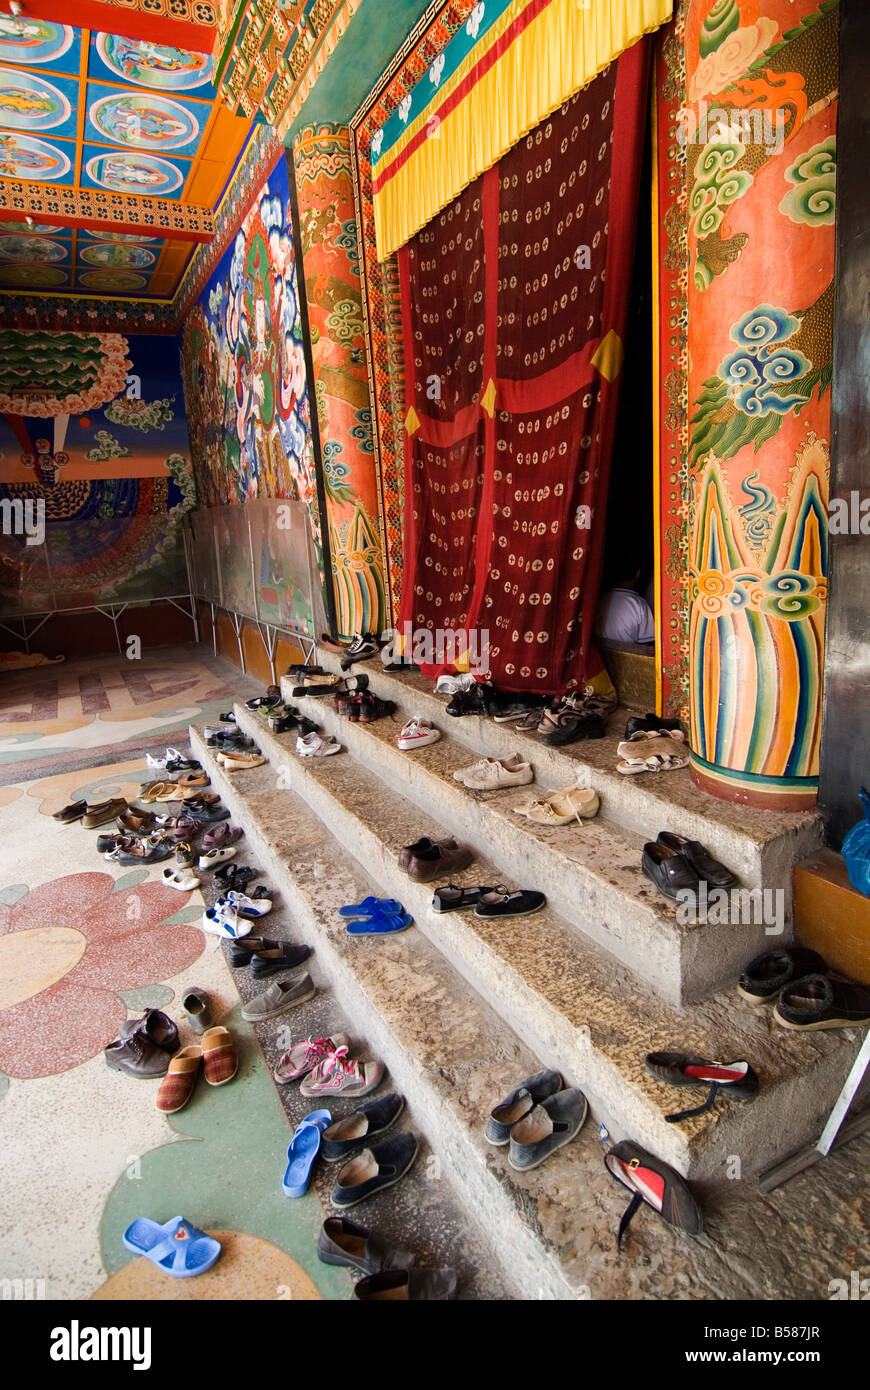 Shoes outside prayer room, Nanwu temple, Kangding, Sichuan, China, Asia Stock Photo